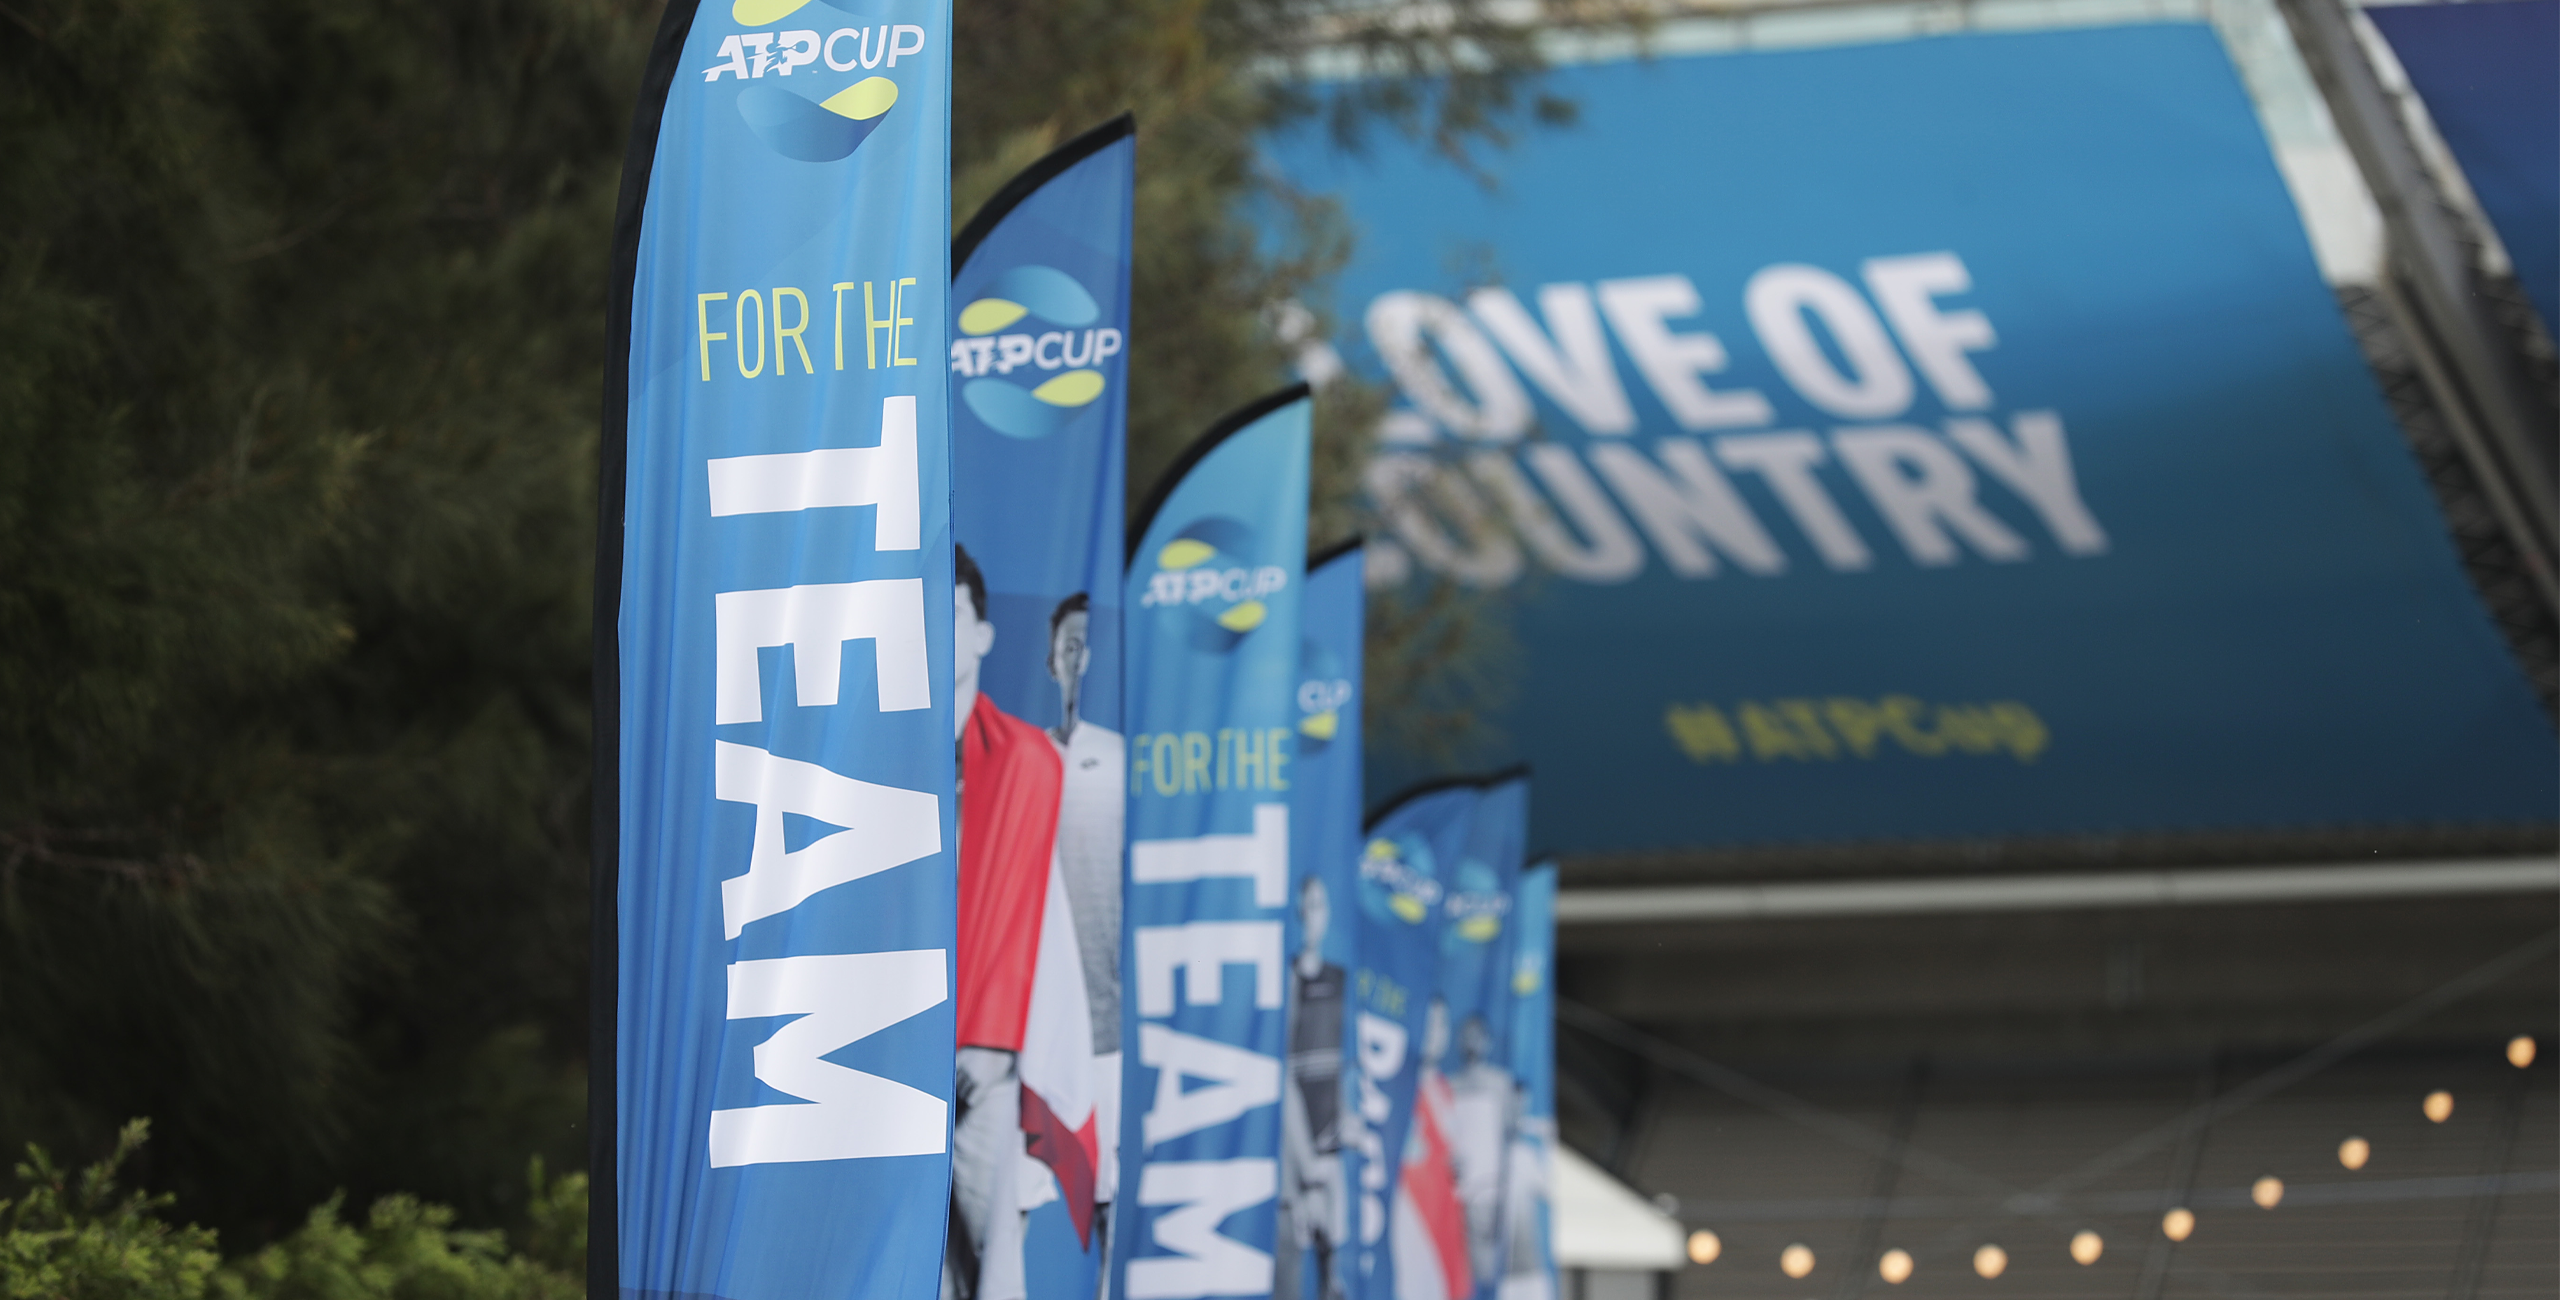 ATP Cup, stadium branding, flag poles